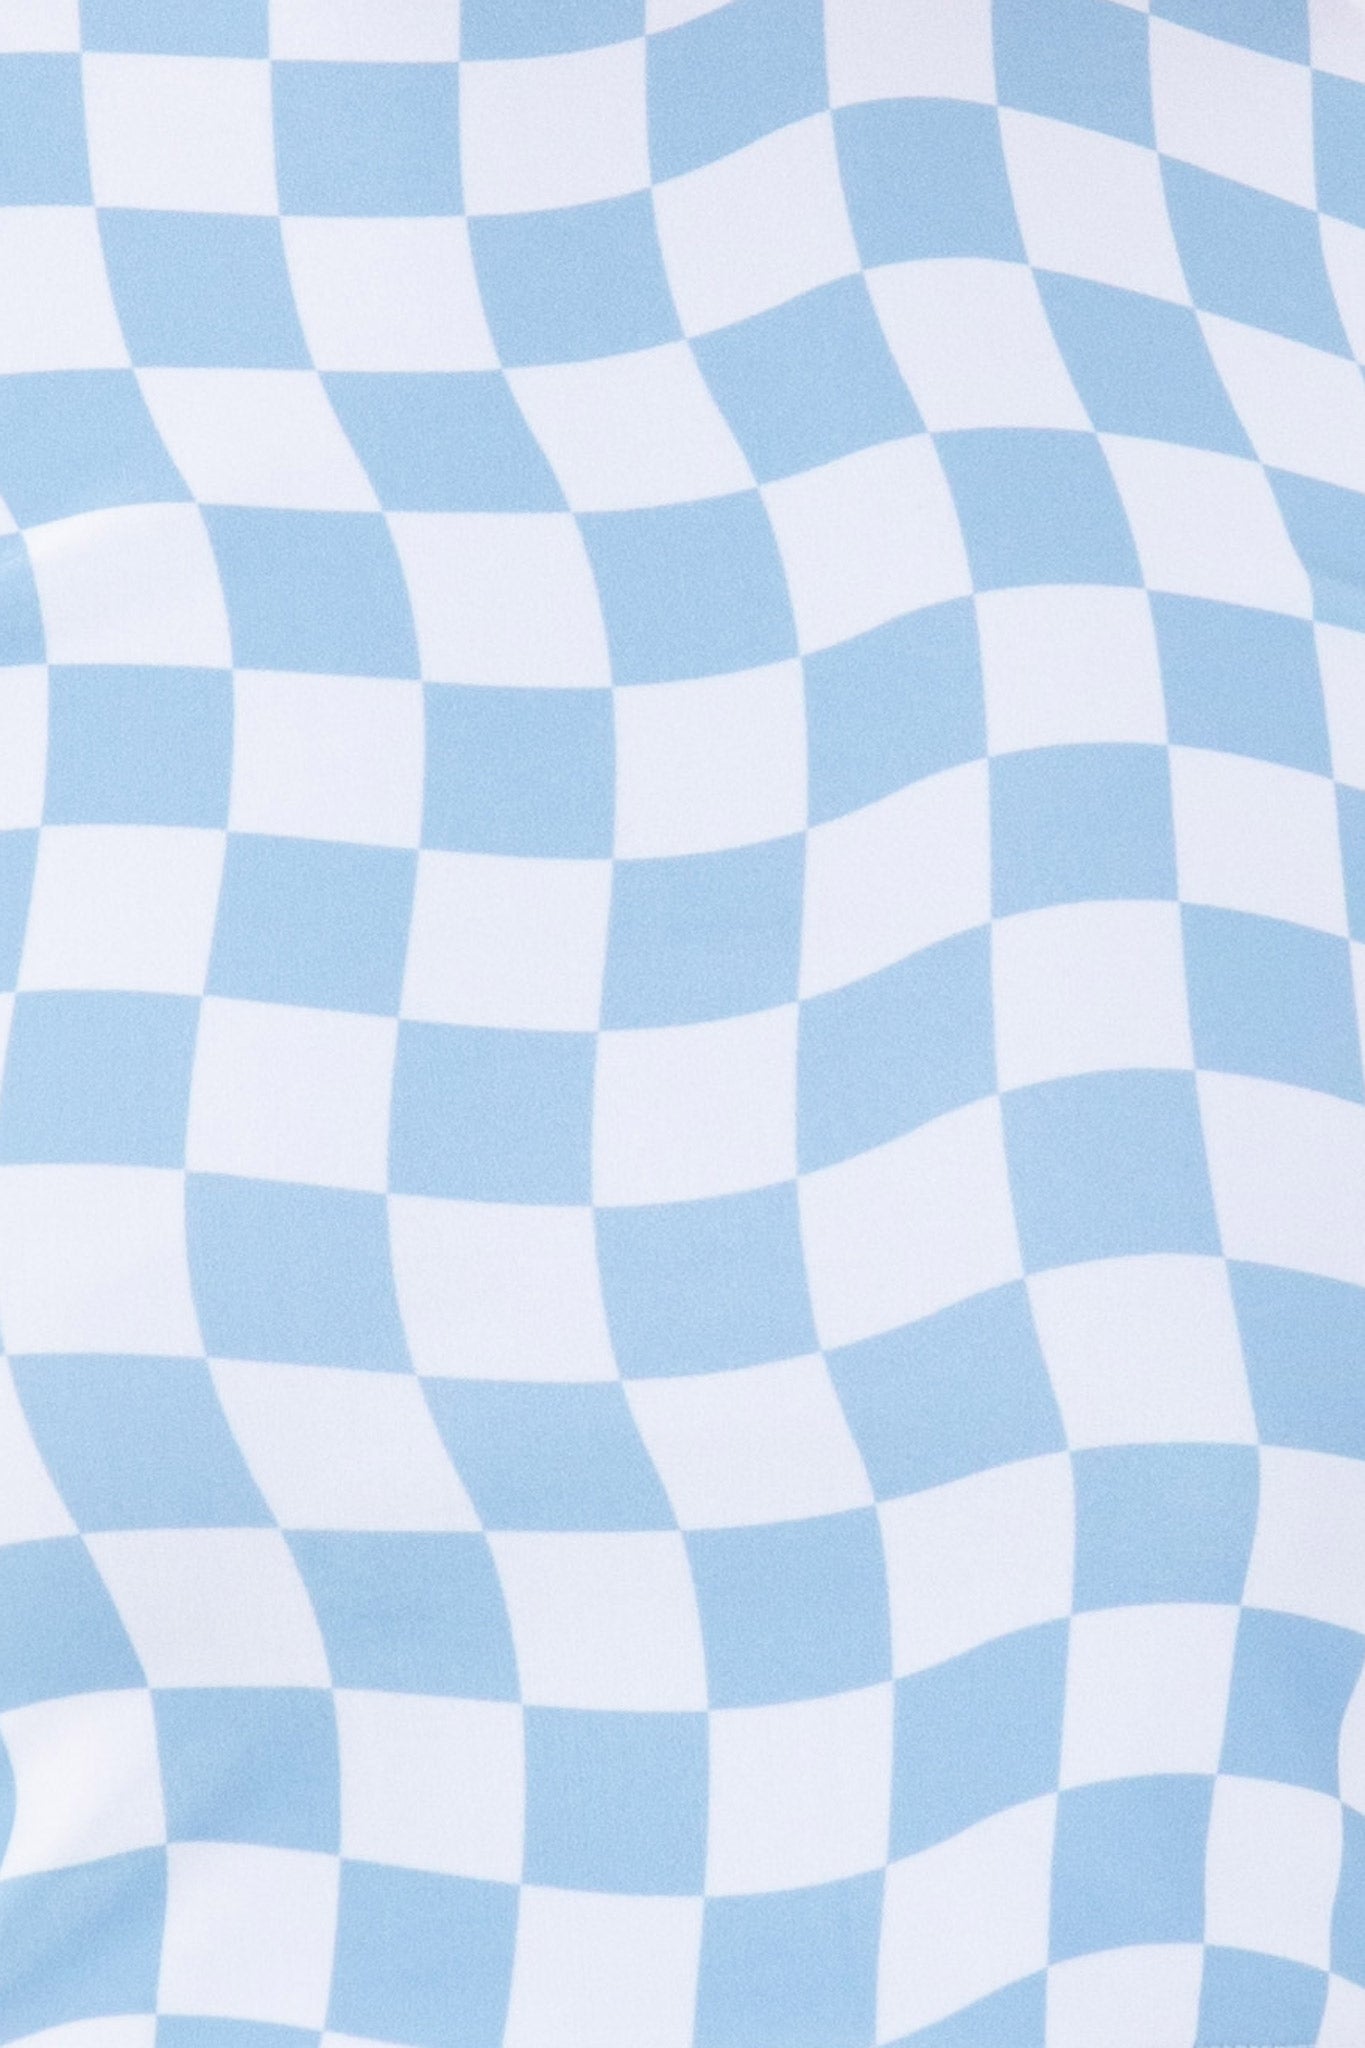 Detailed view of the blue and white checkered fabric of the Putu Triangle Bikini Top